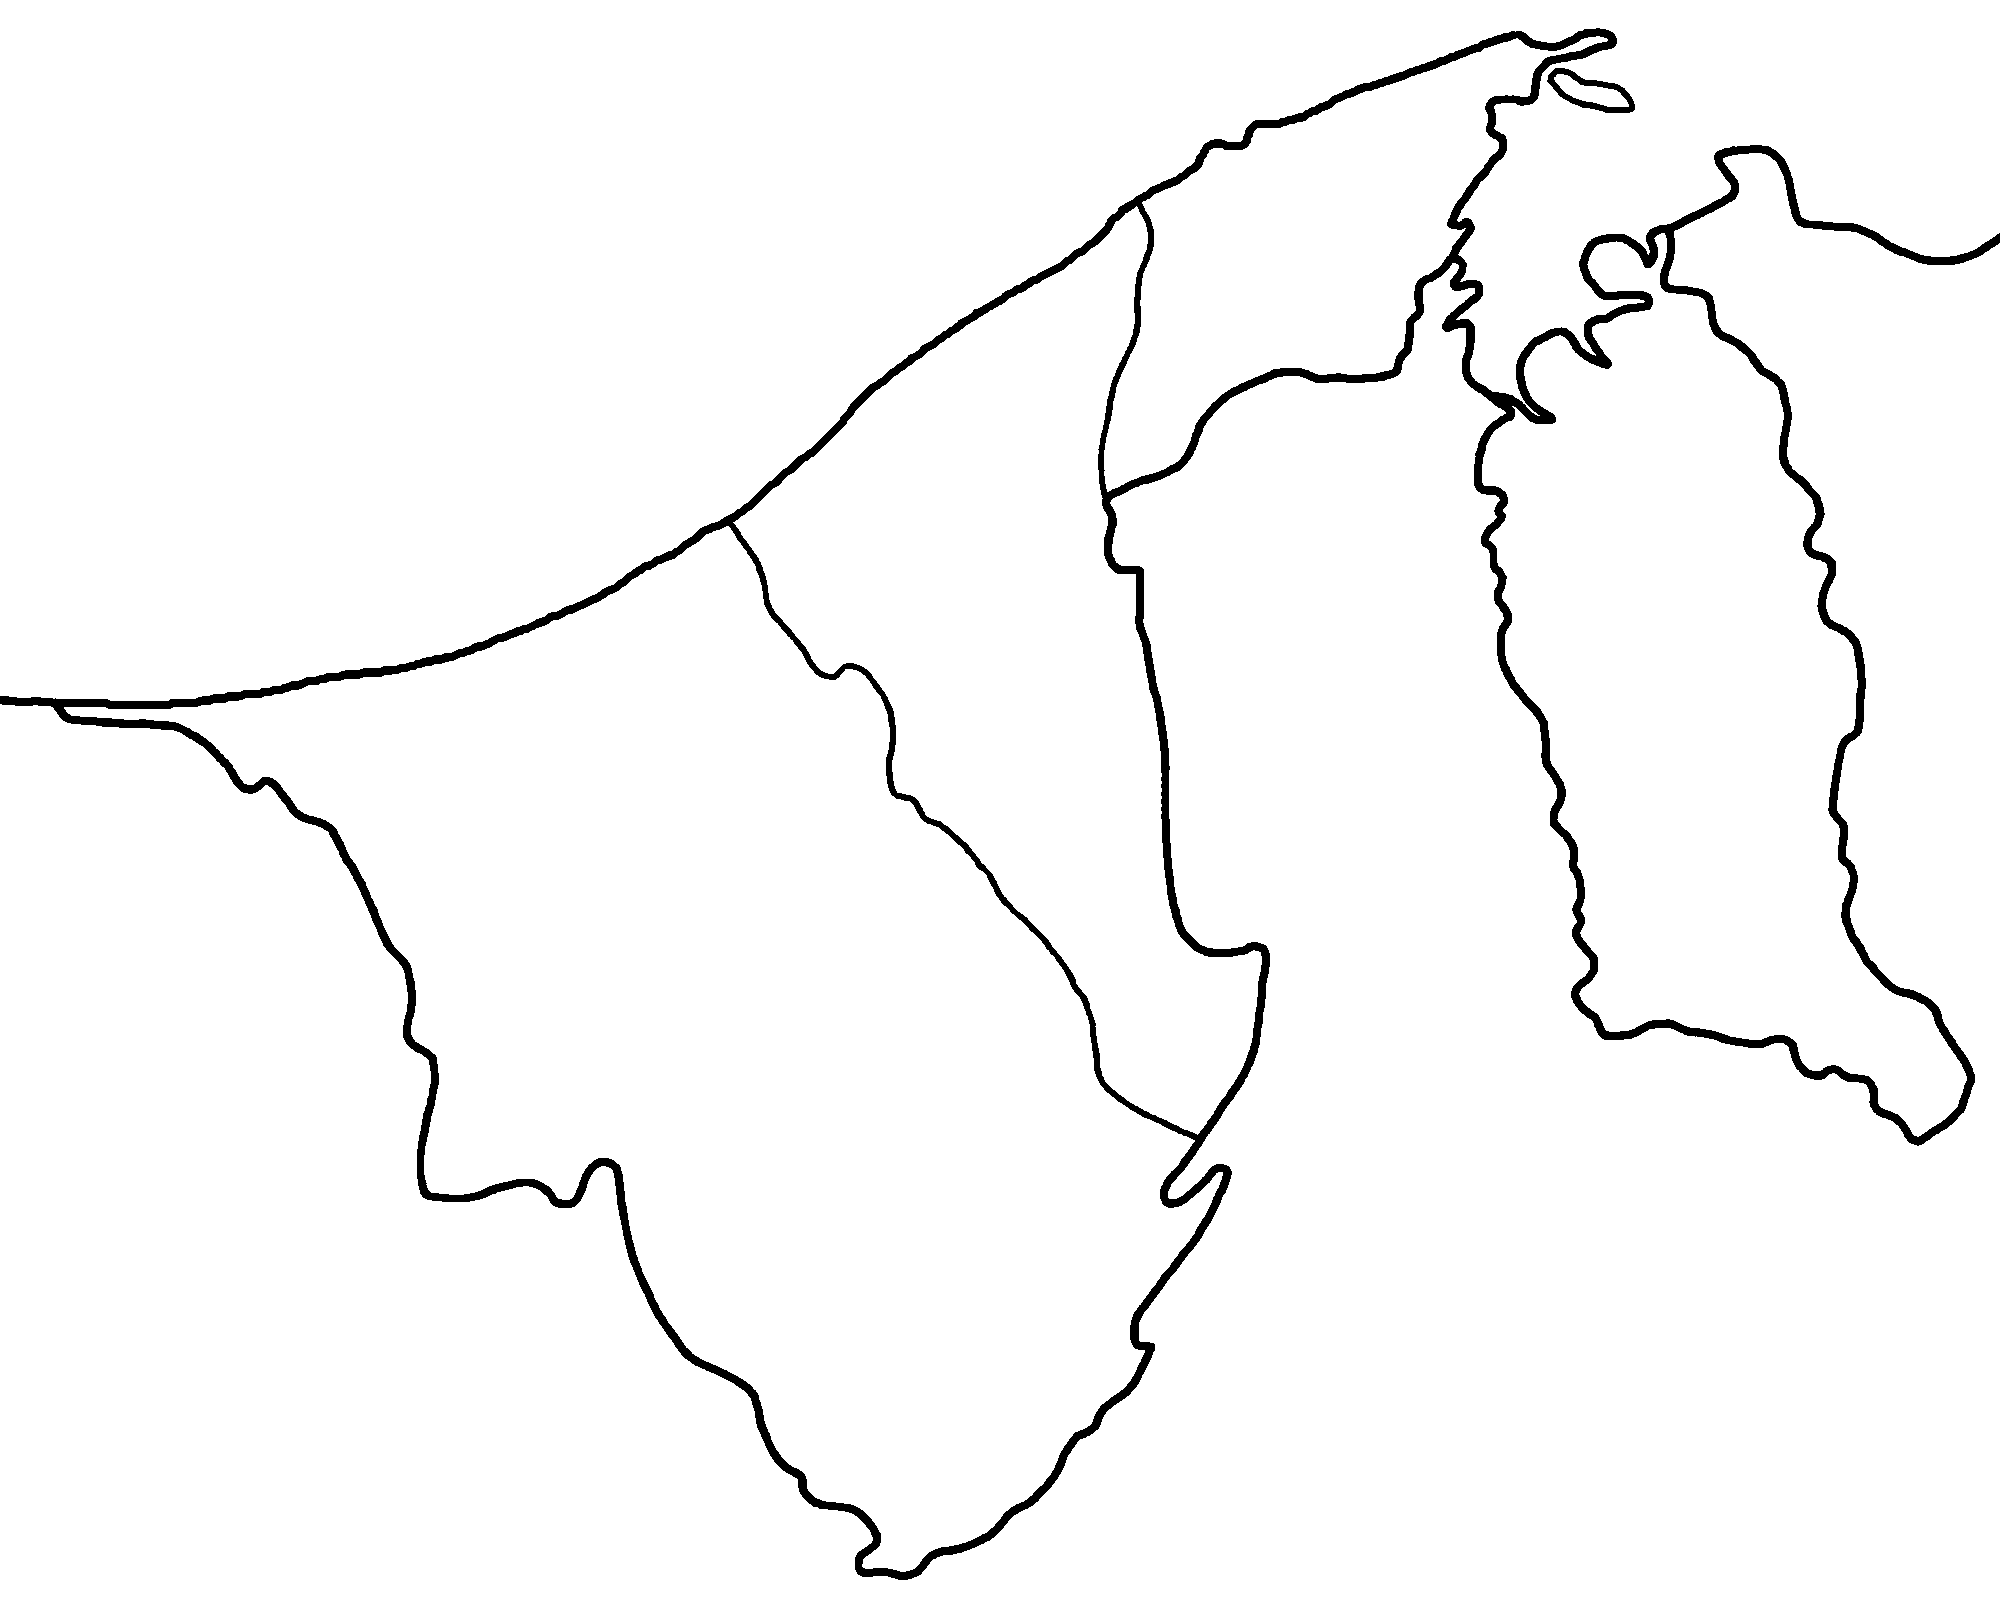 Brunei Districts Blank - Mapsof.